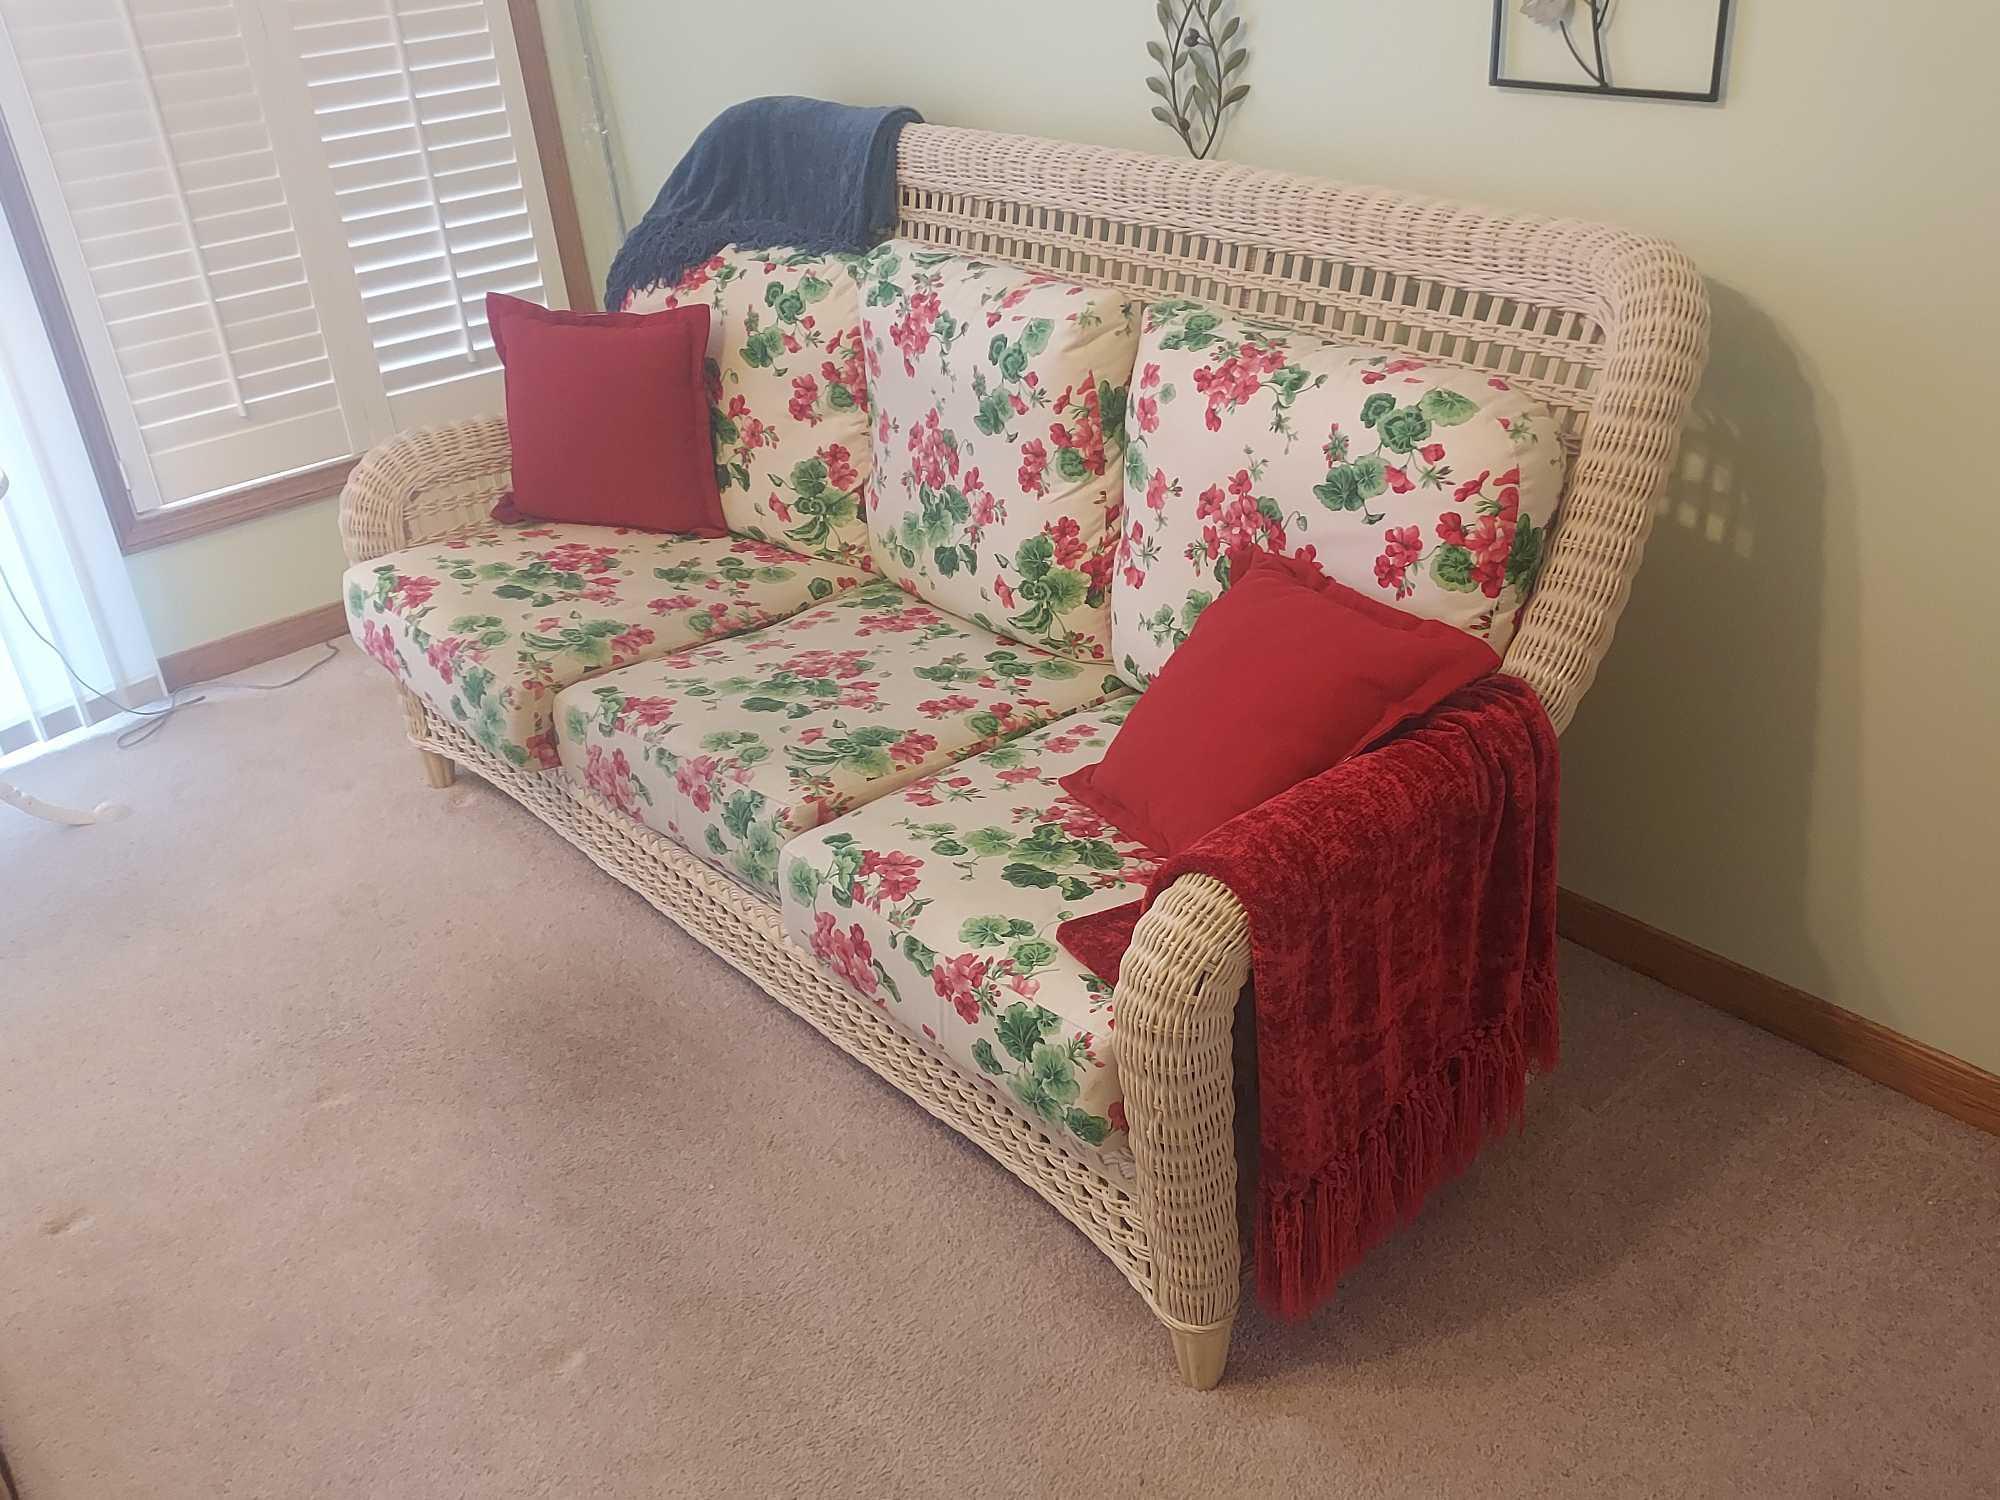 3 Piece Wicker Furniture Set - Couch, Chair, & Ottoman